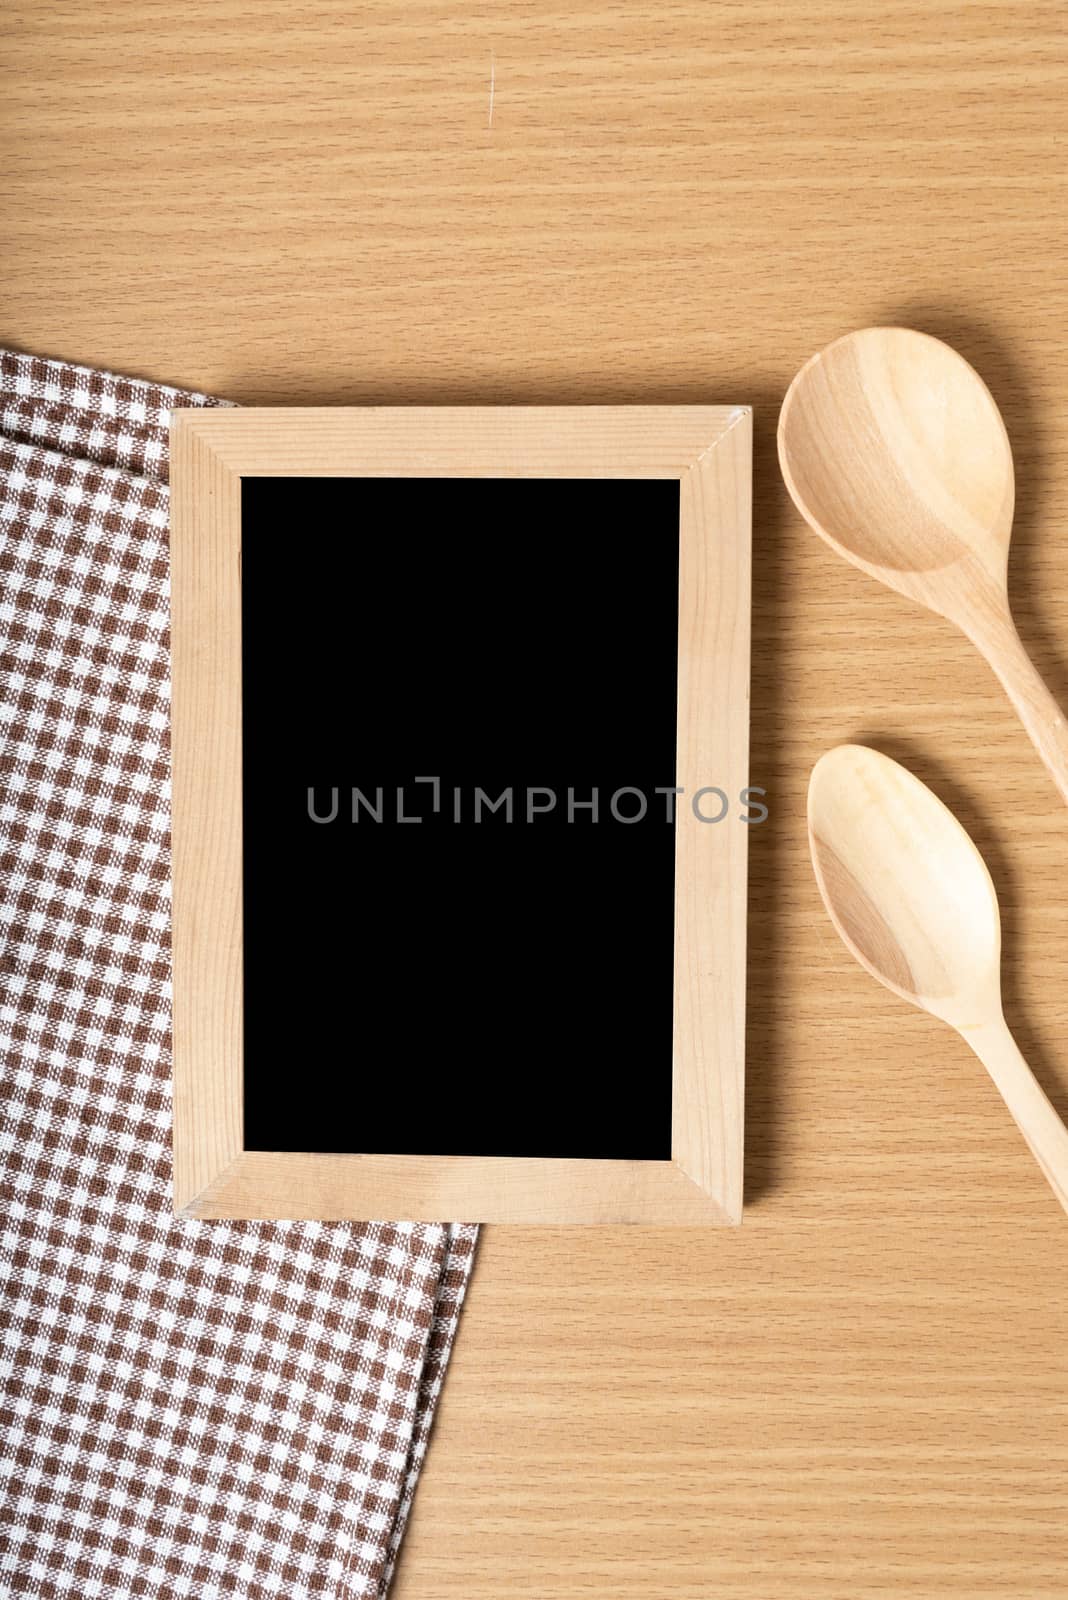 blackboard and wooden spoon by ammza12